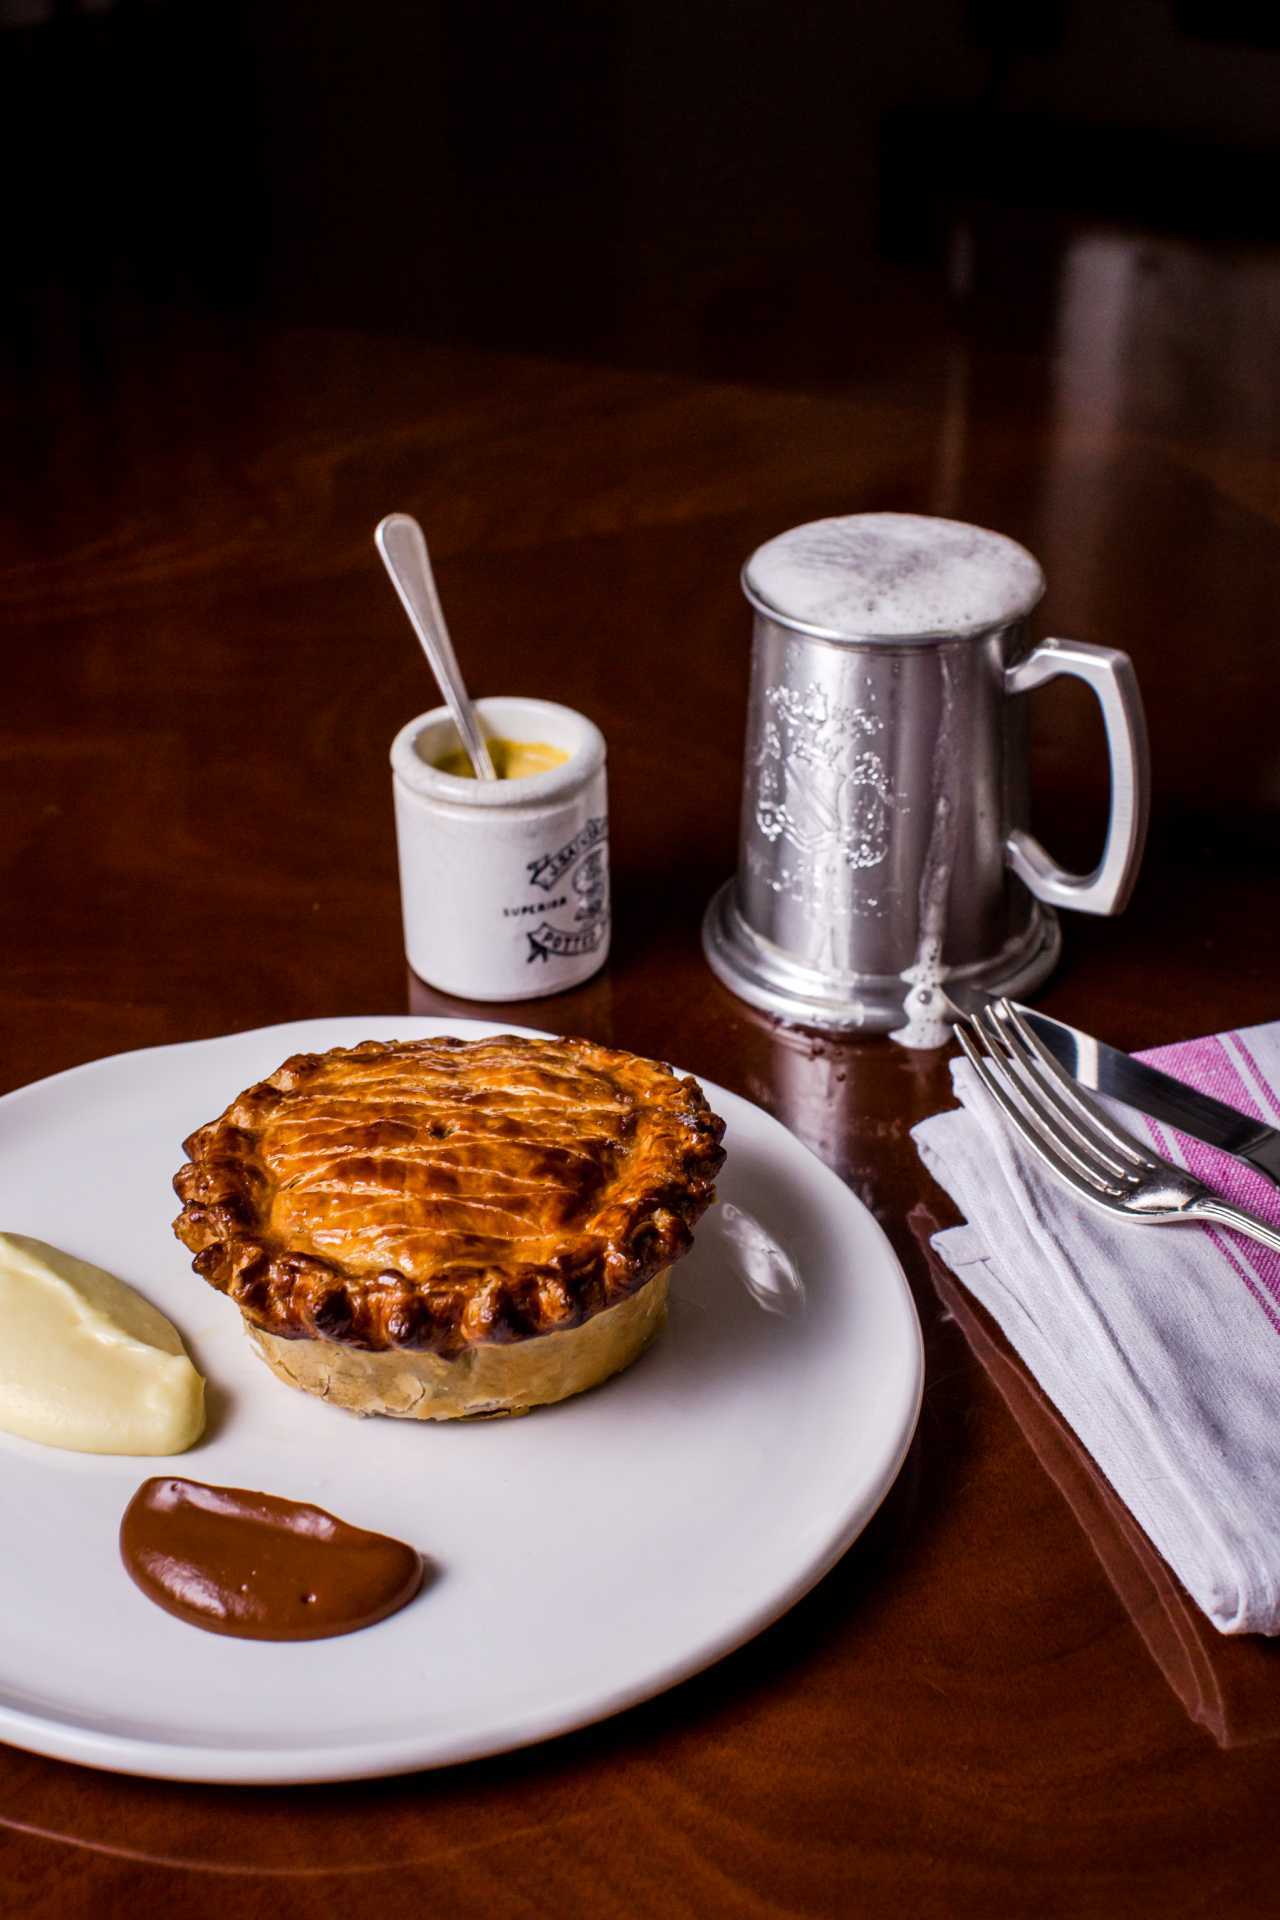 Restaurants Regent Street: A pie at The Wigmore